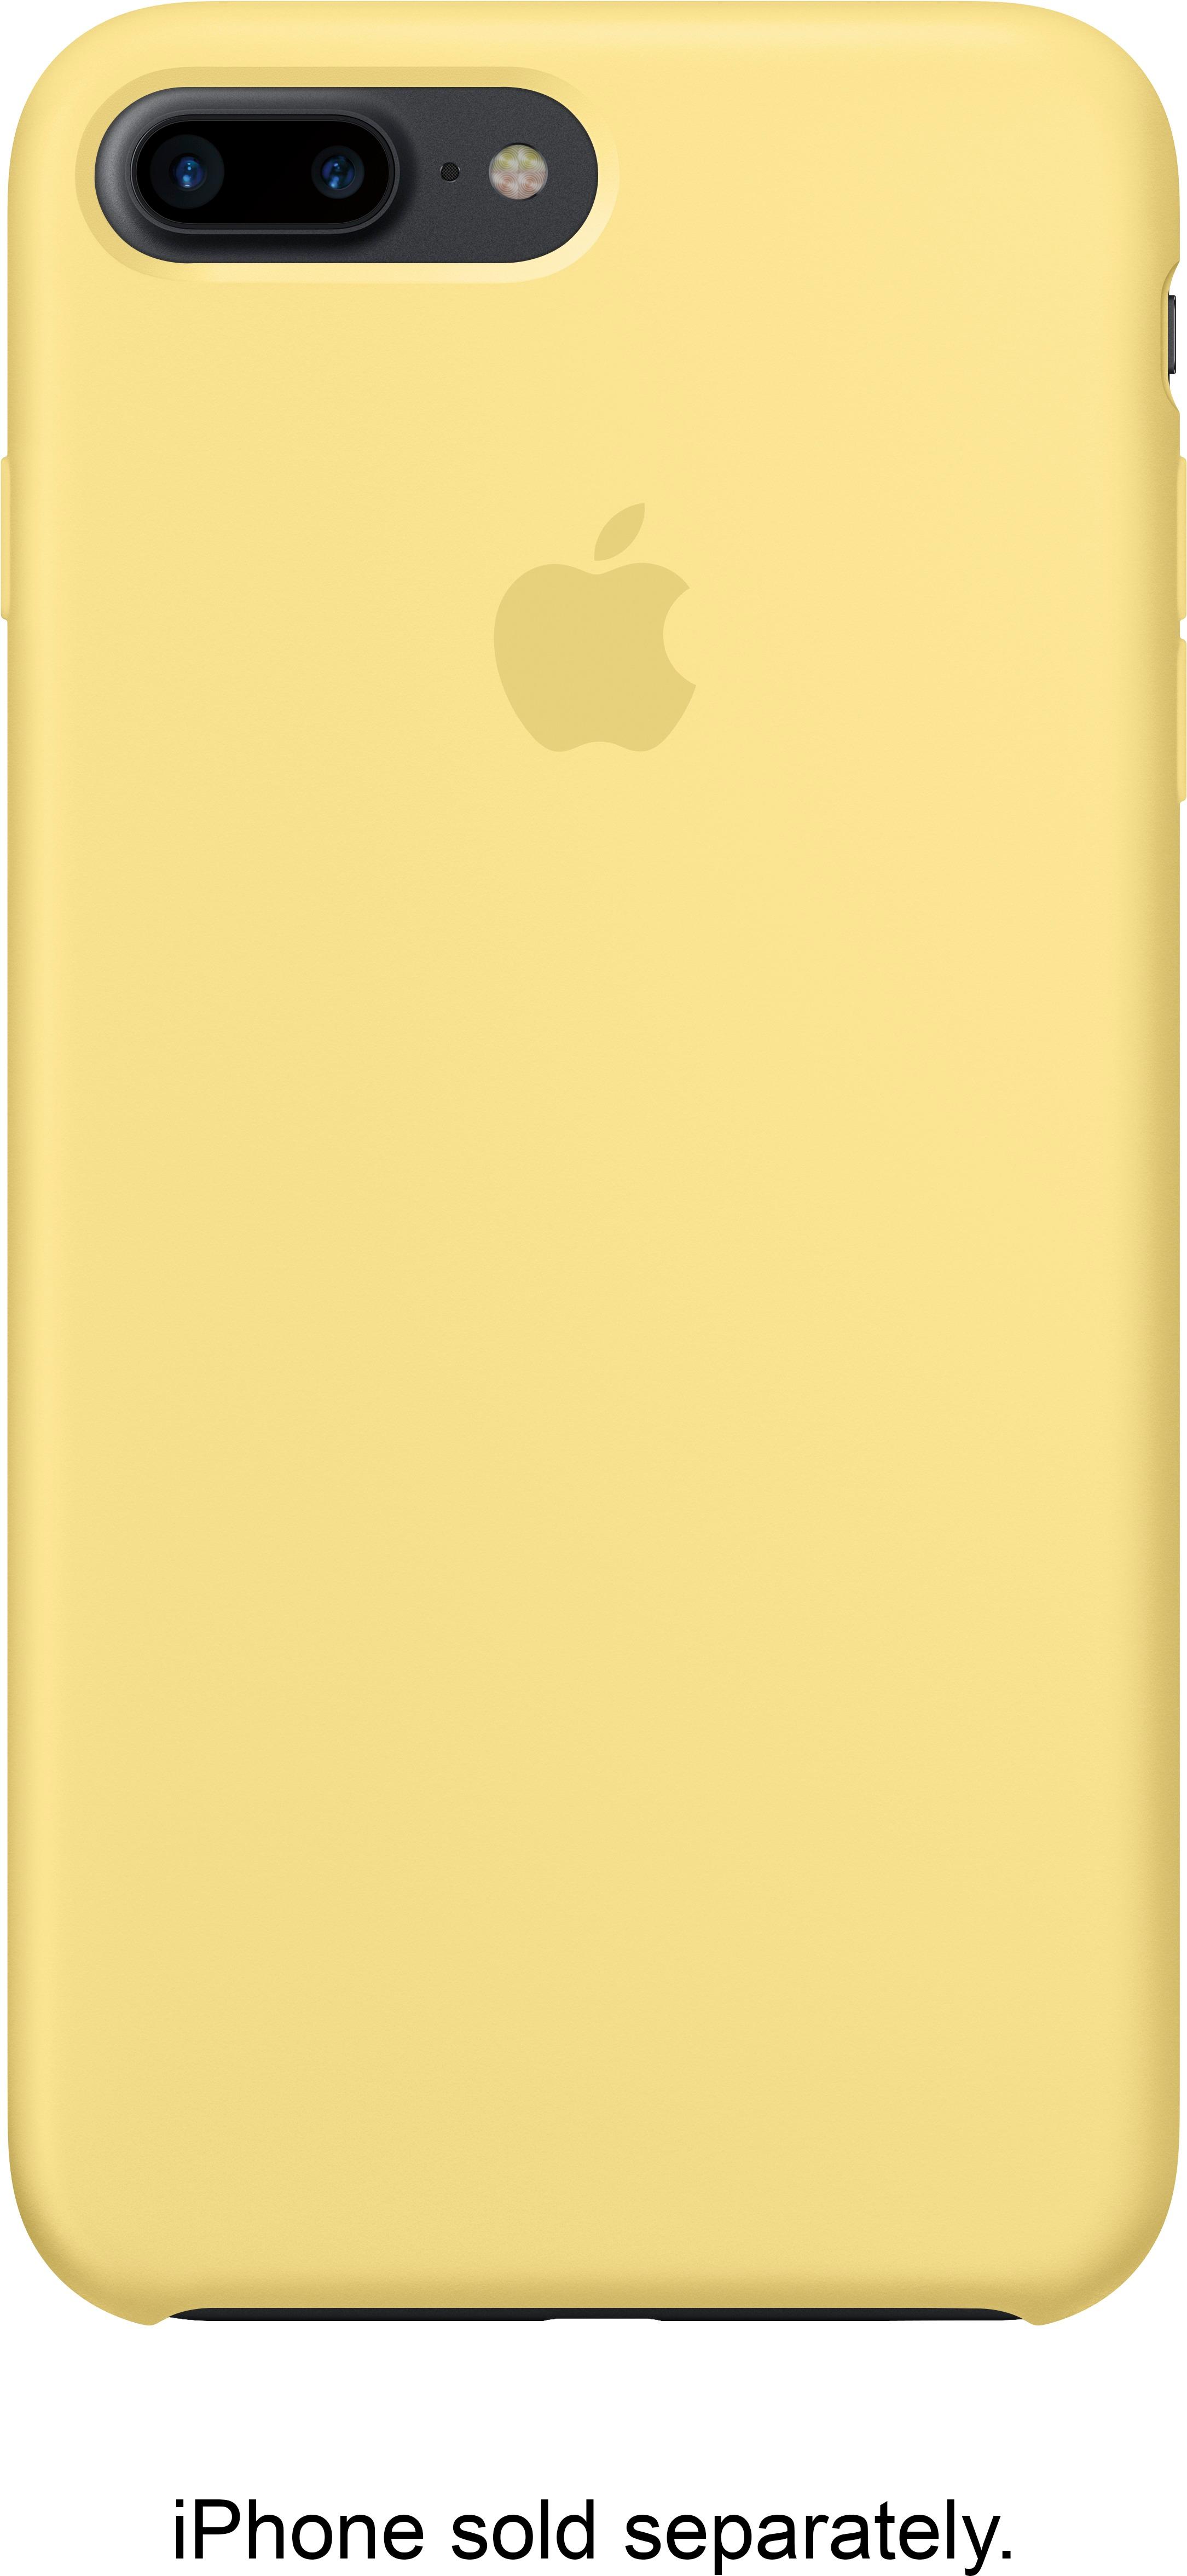 iPhone 7 Plus Cases - Buy iPhone 7 Plus Covers Online